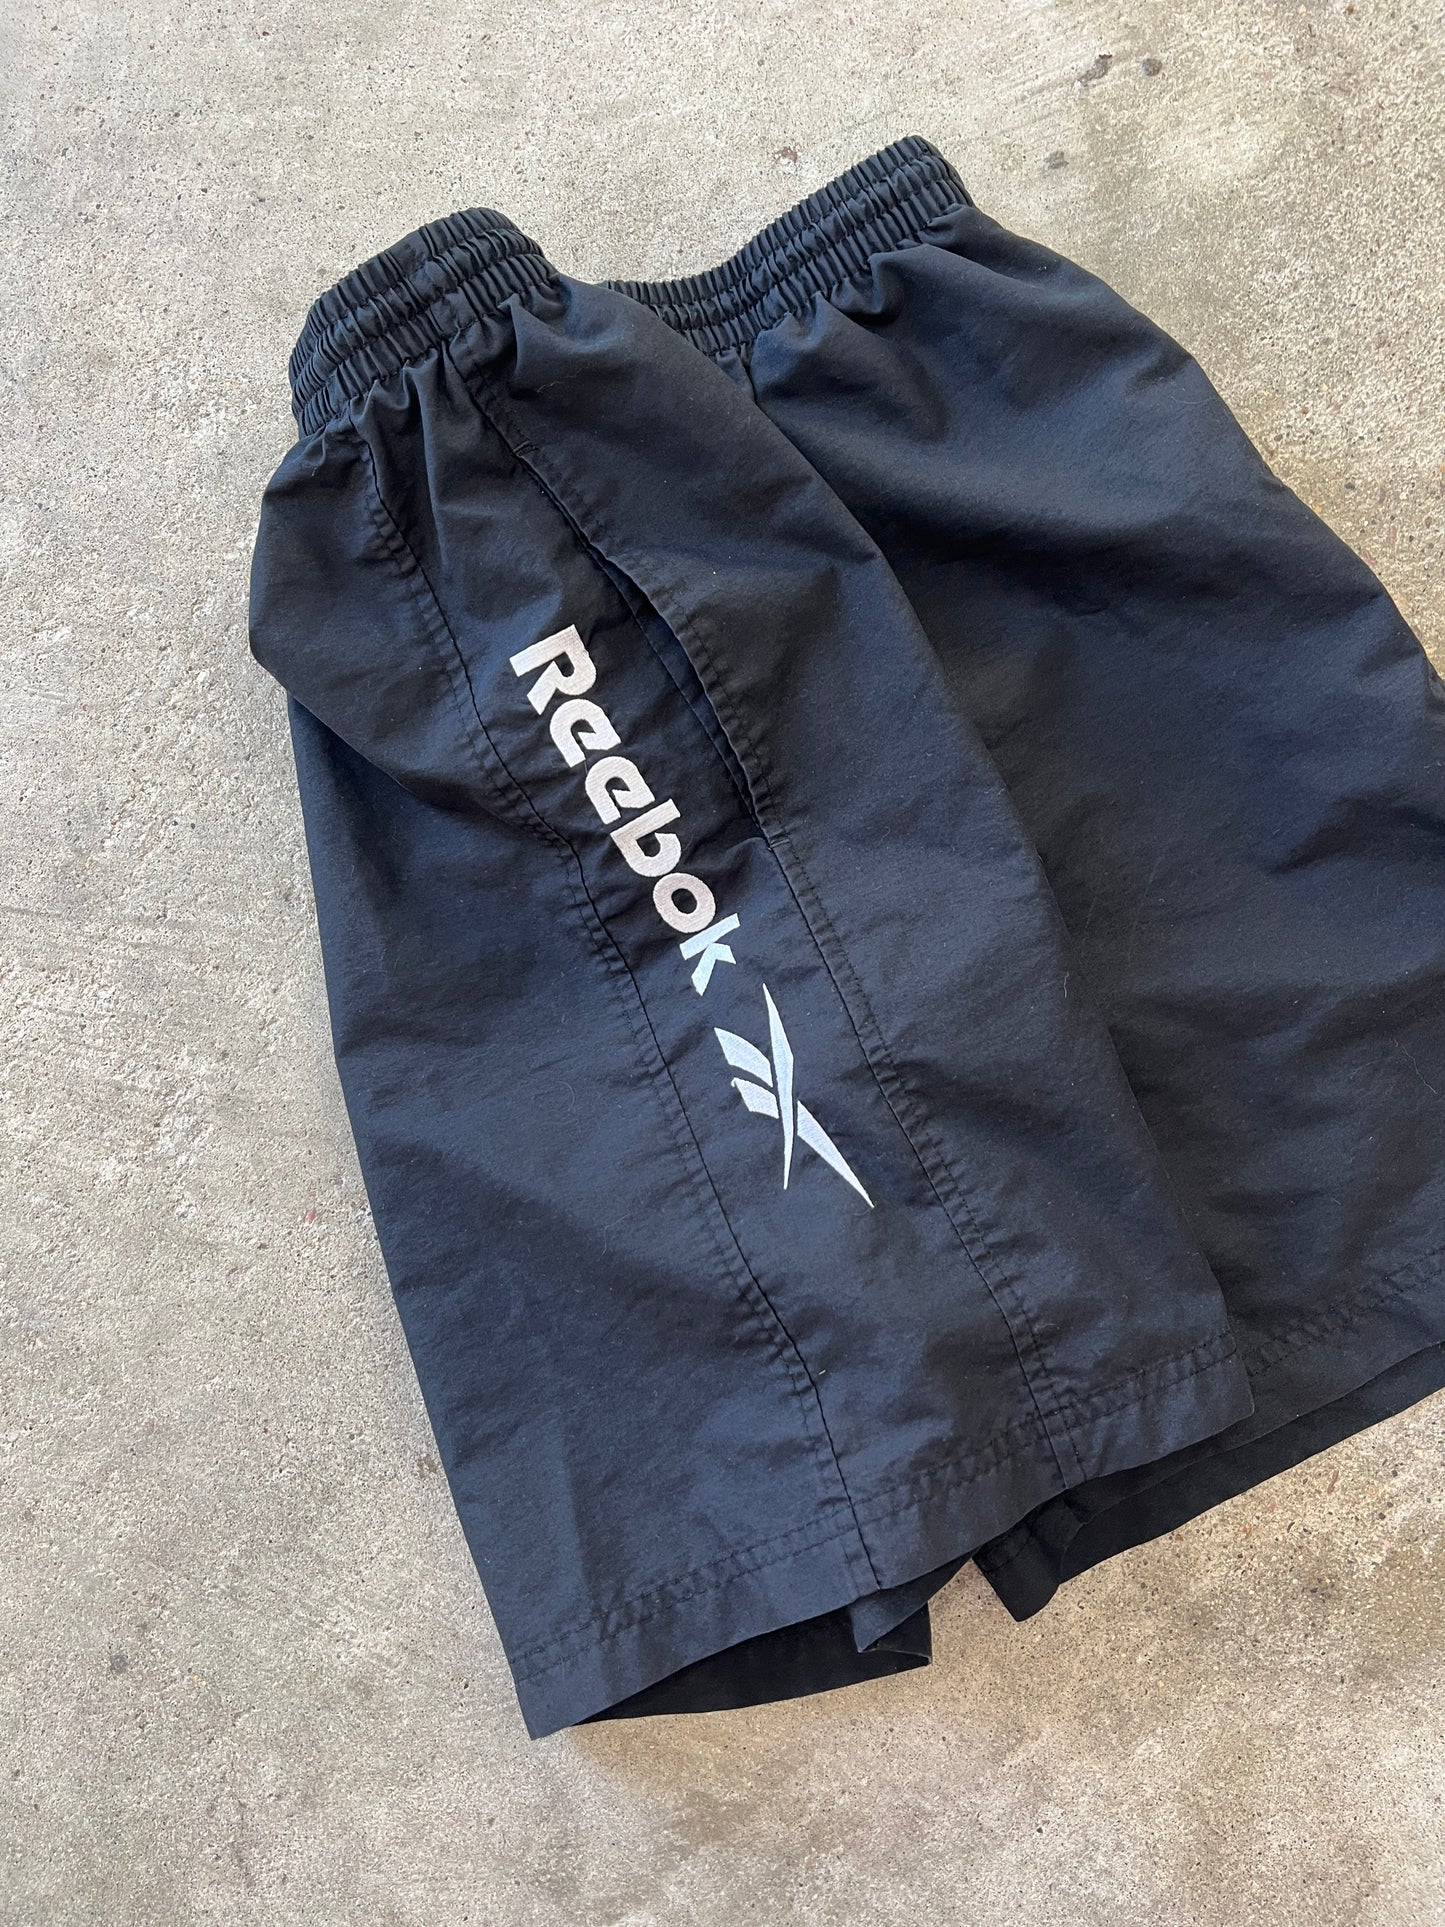 Vintage Black Reebok Shorts - L